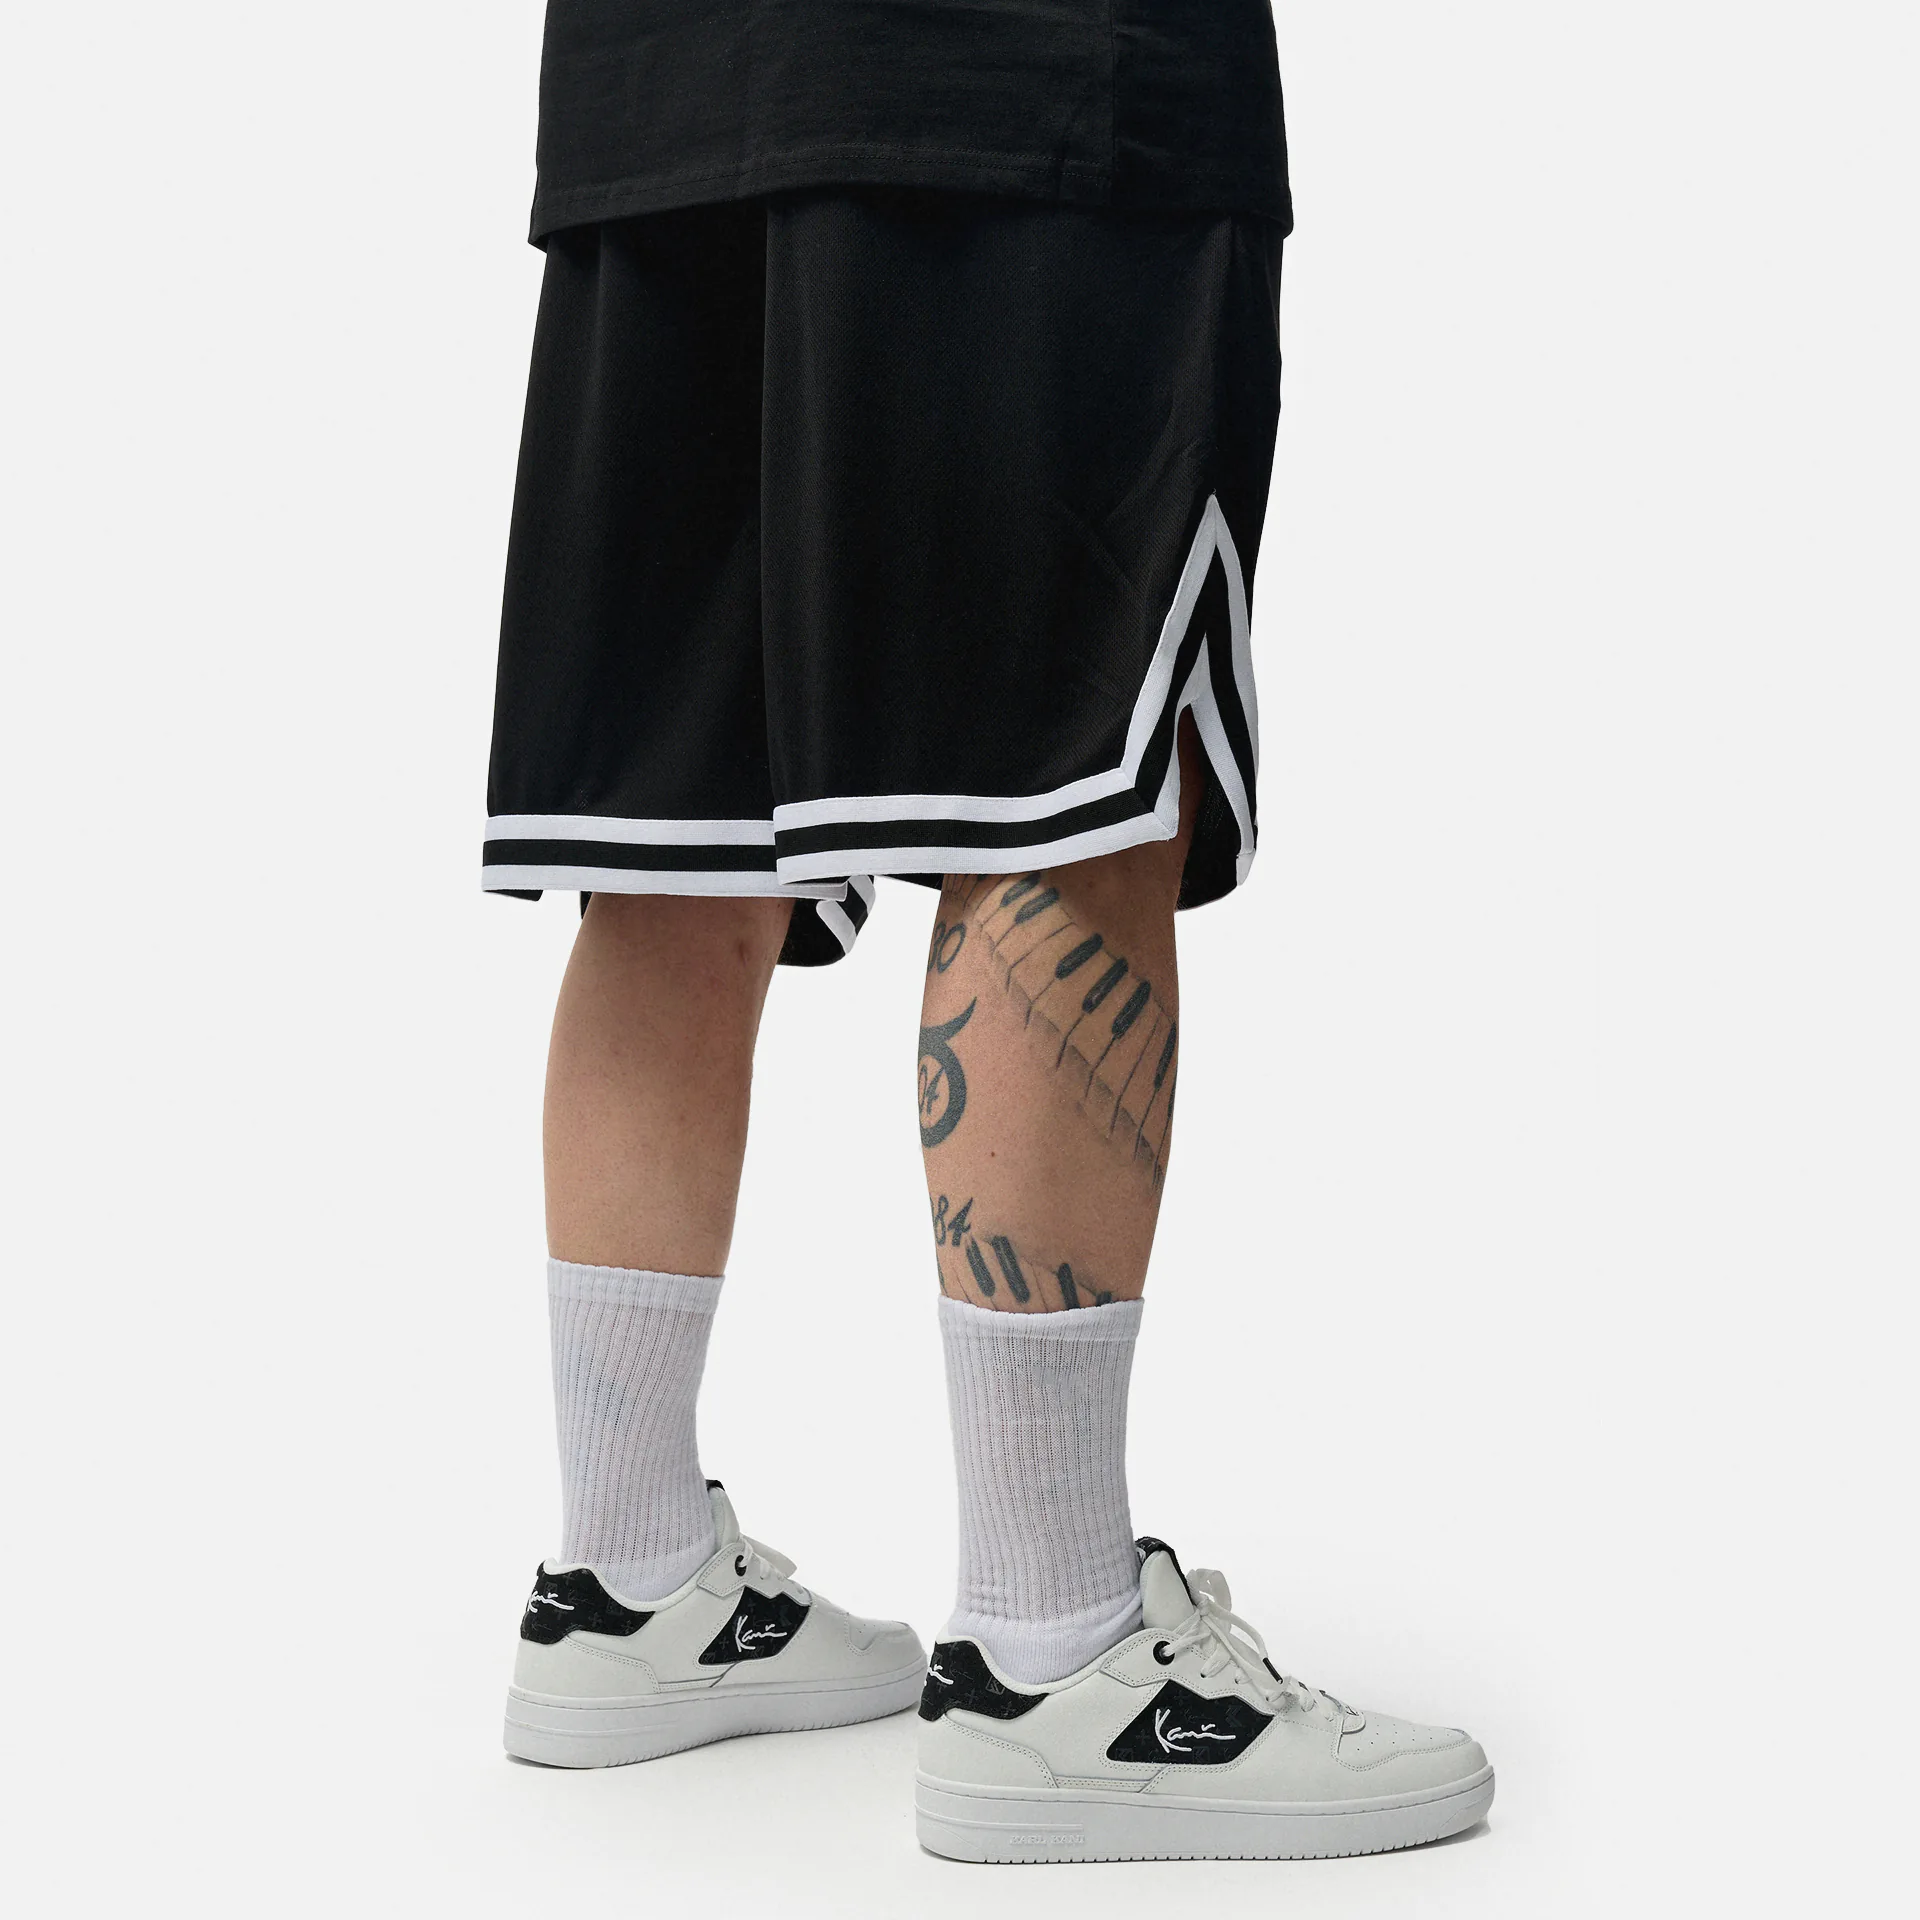 Karl Kani Signature Mesh Shorts Black/White